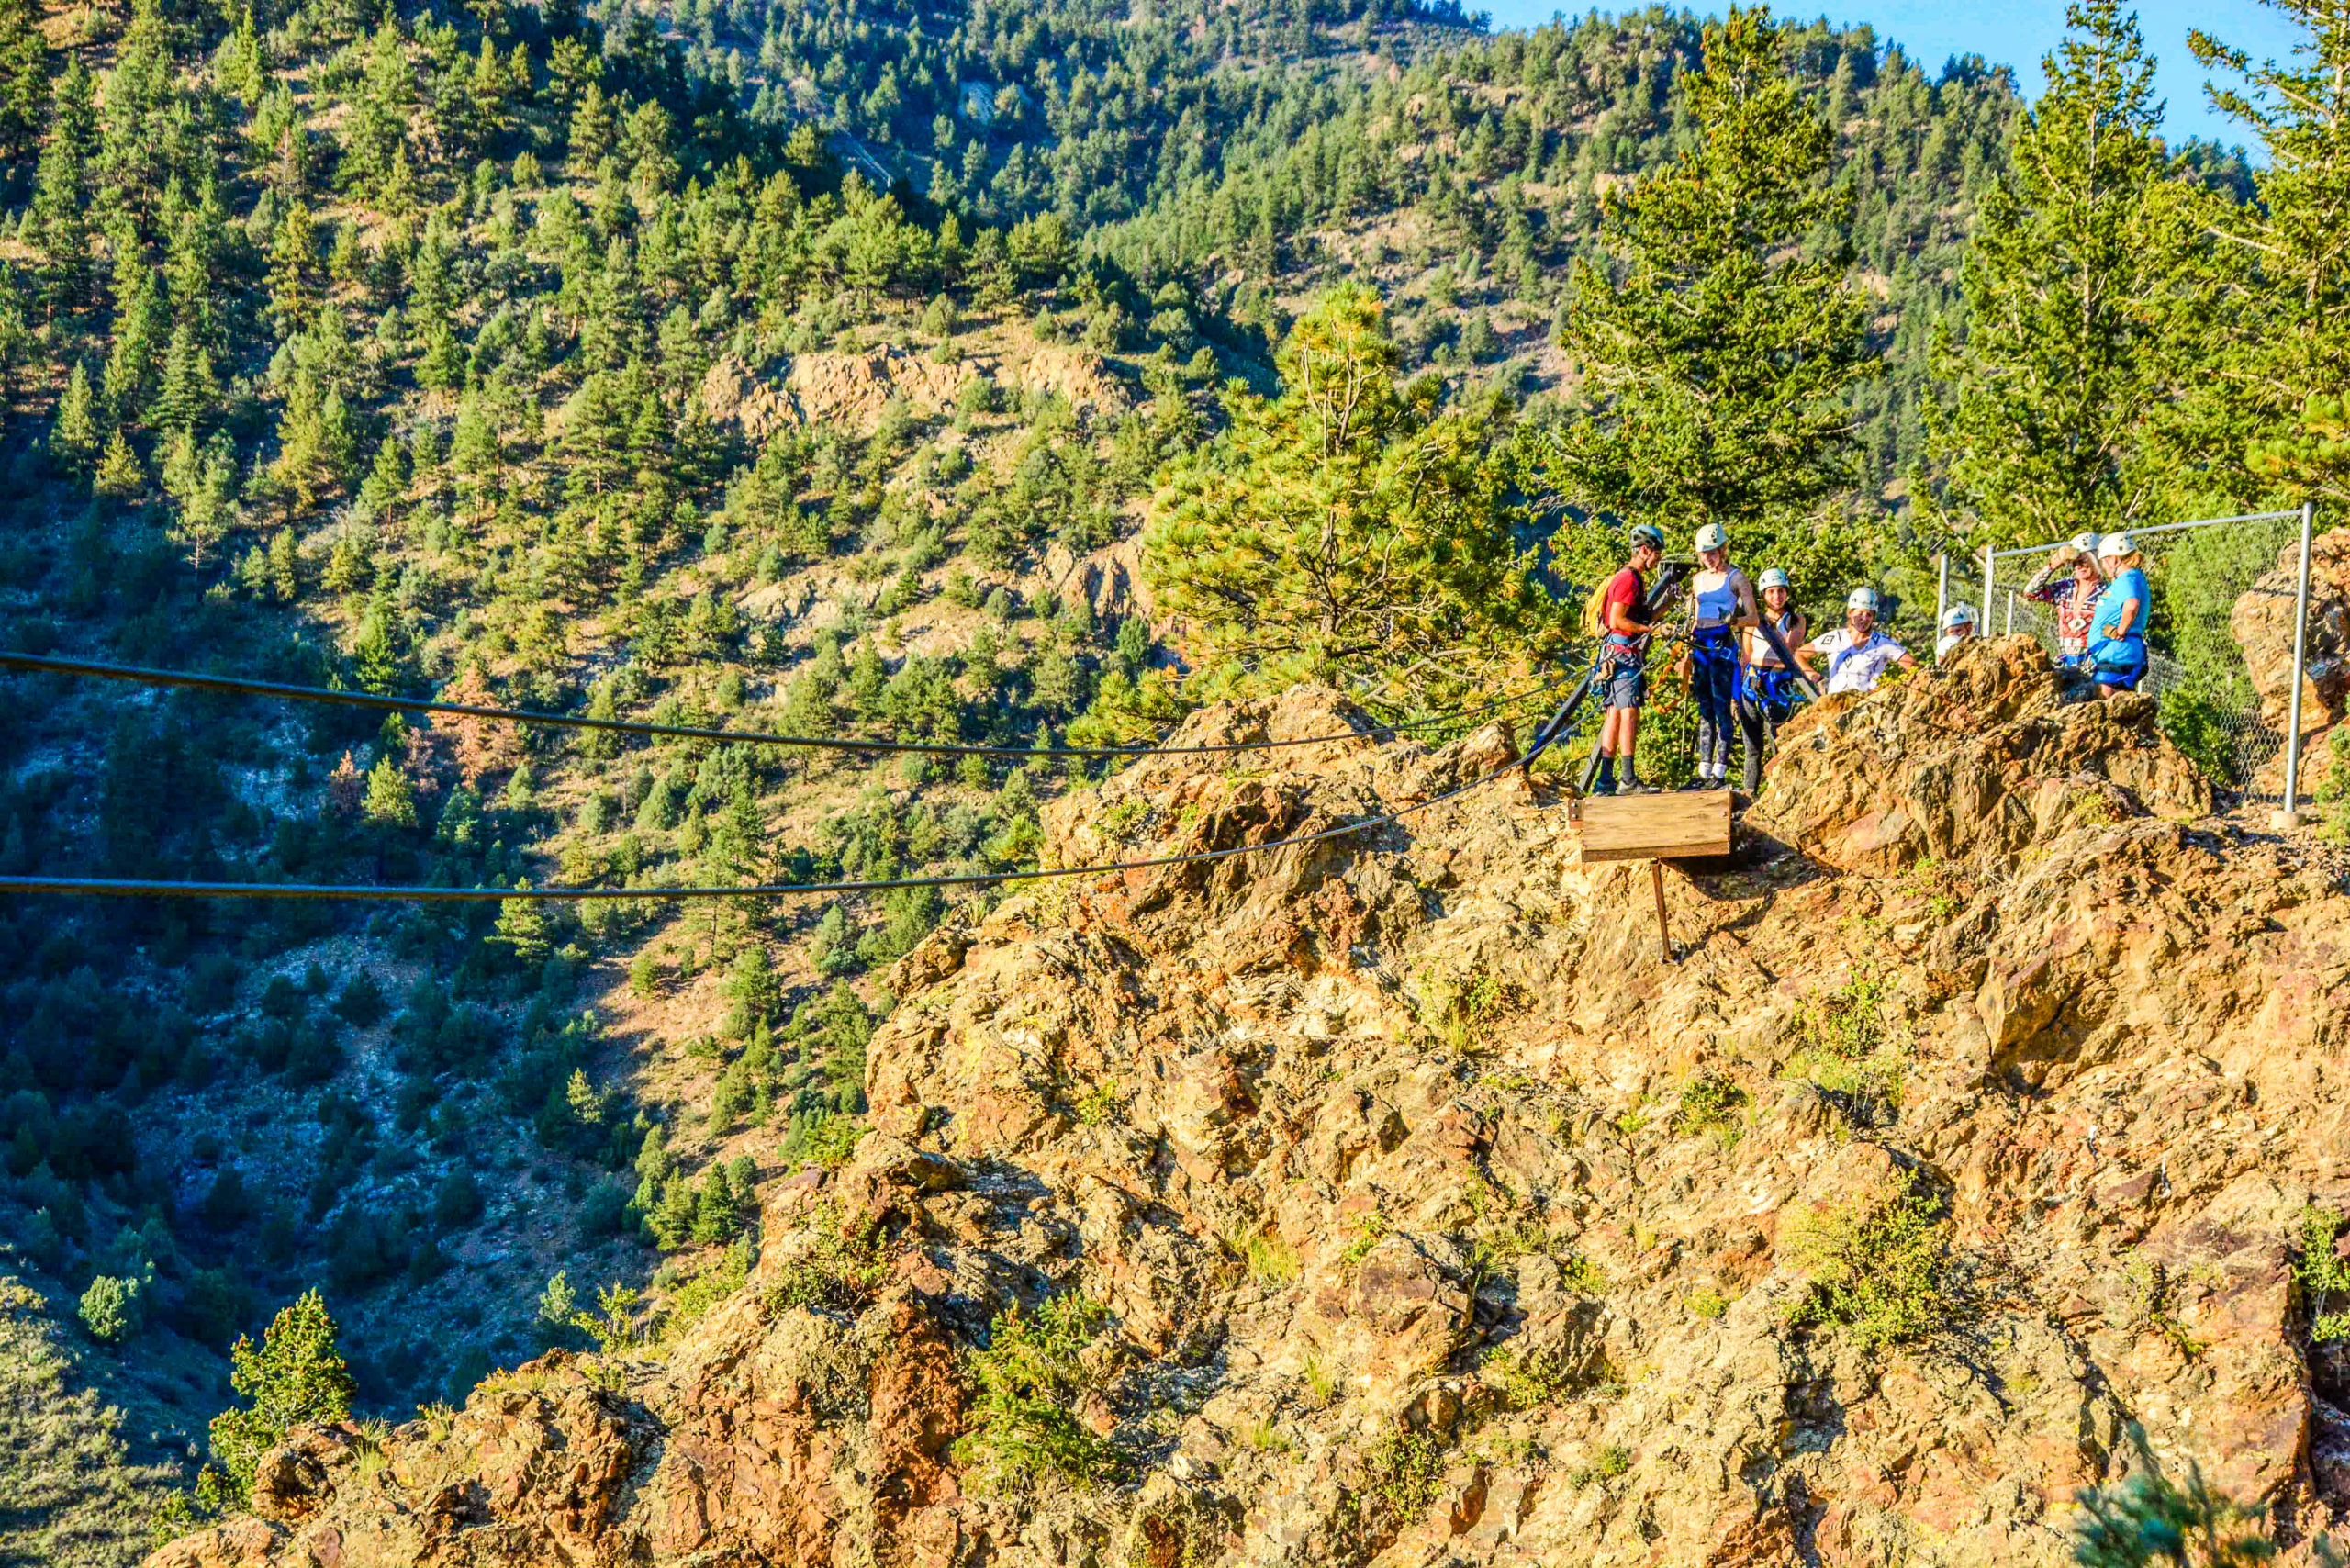 people on the cliffside zipline course in Colorado